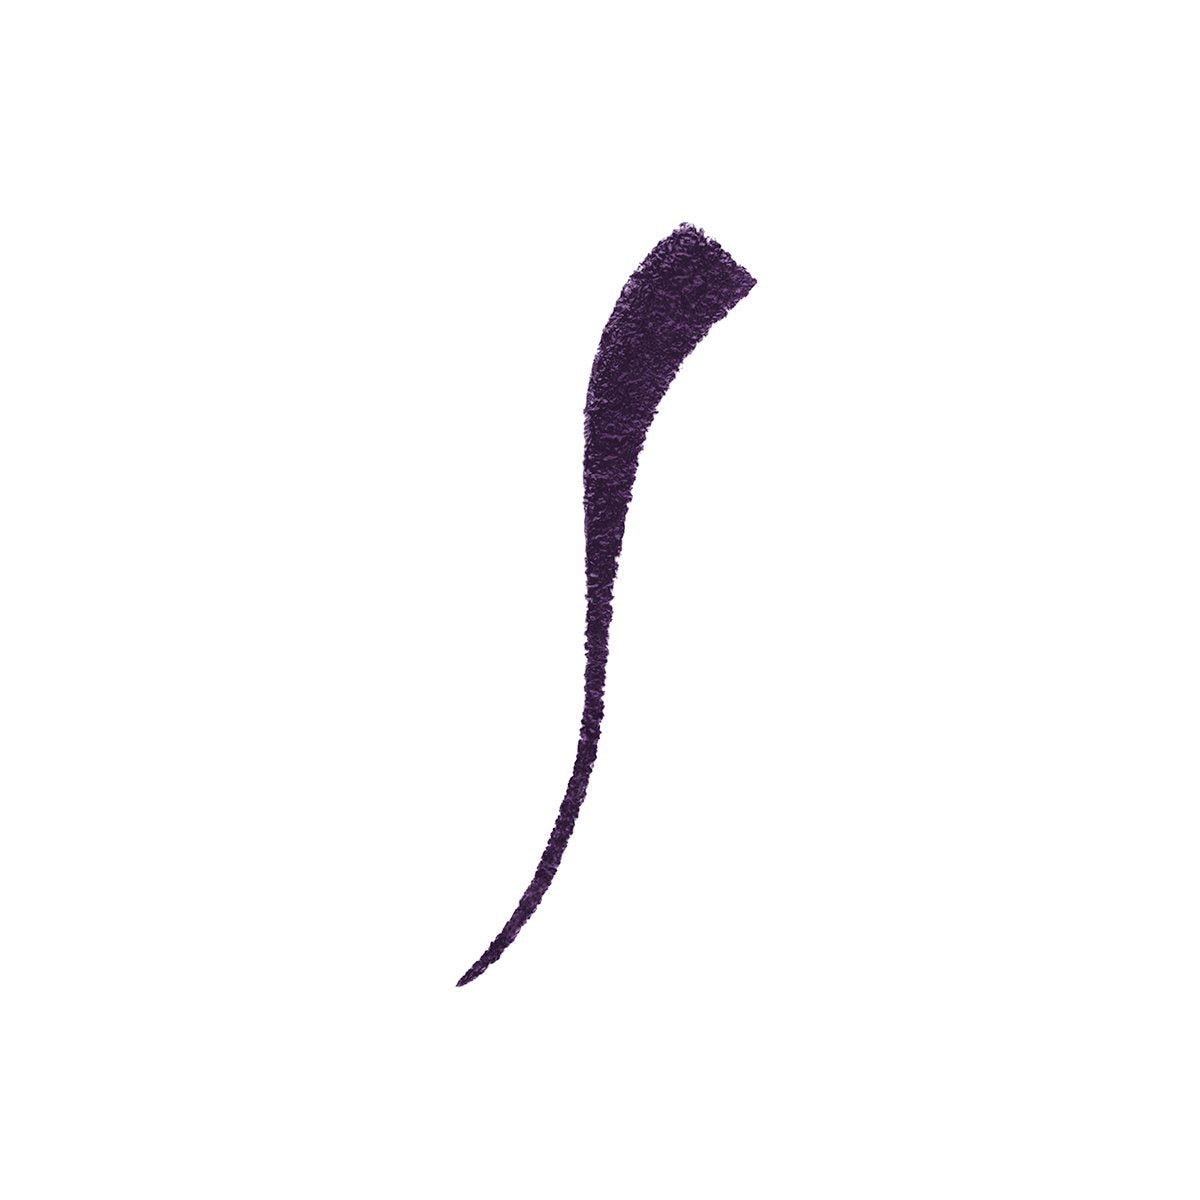 POUPRE - ROYAL PURPLE - royal purple liquid eyeliner with precise brush tip